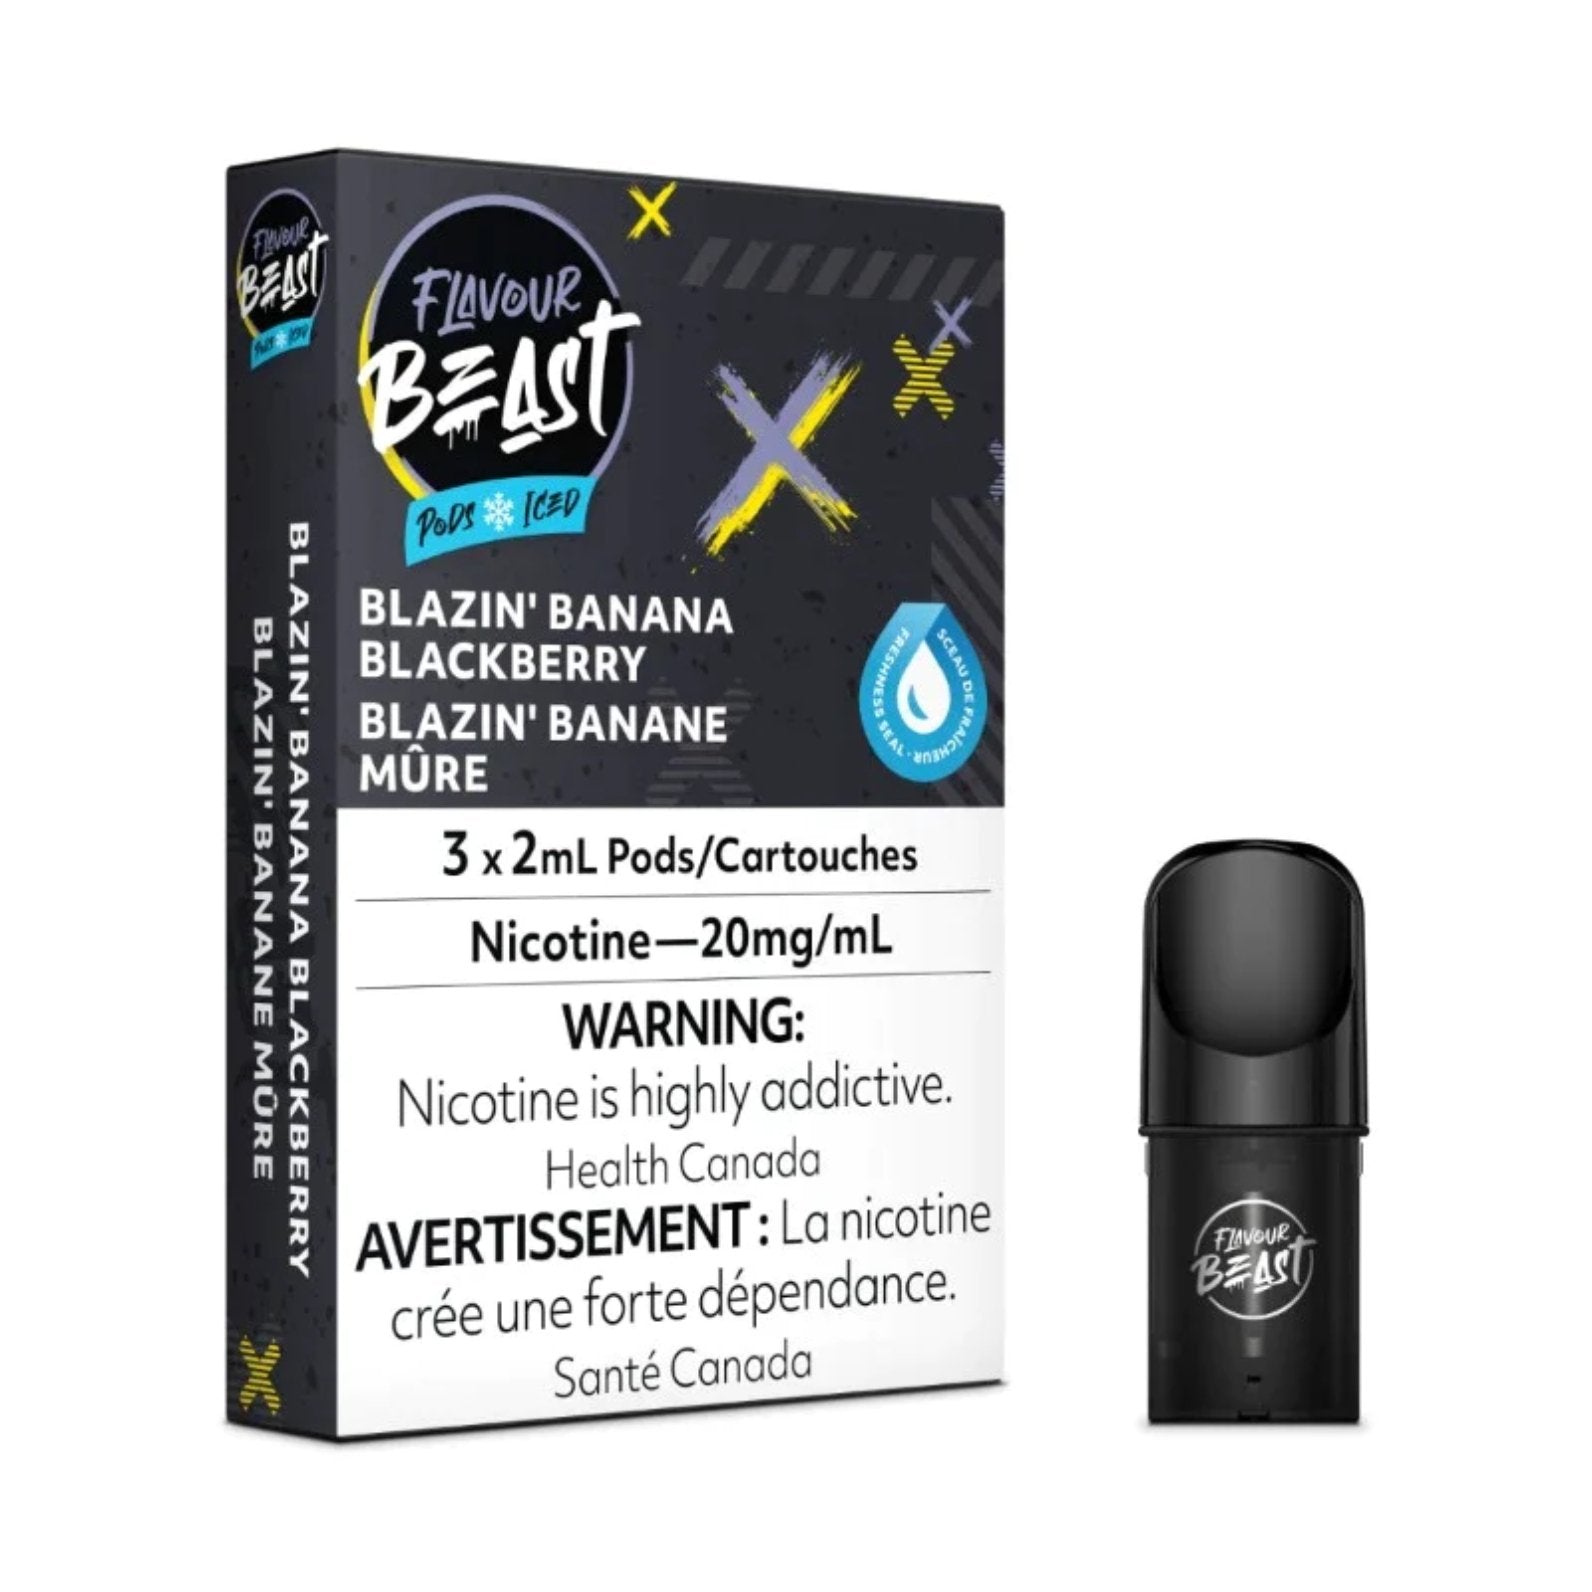 Flavour Beast Pods - Blazin' Banana Blackberry Iced - Vape Crush